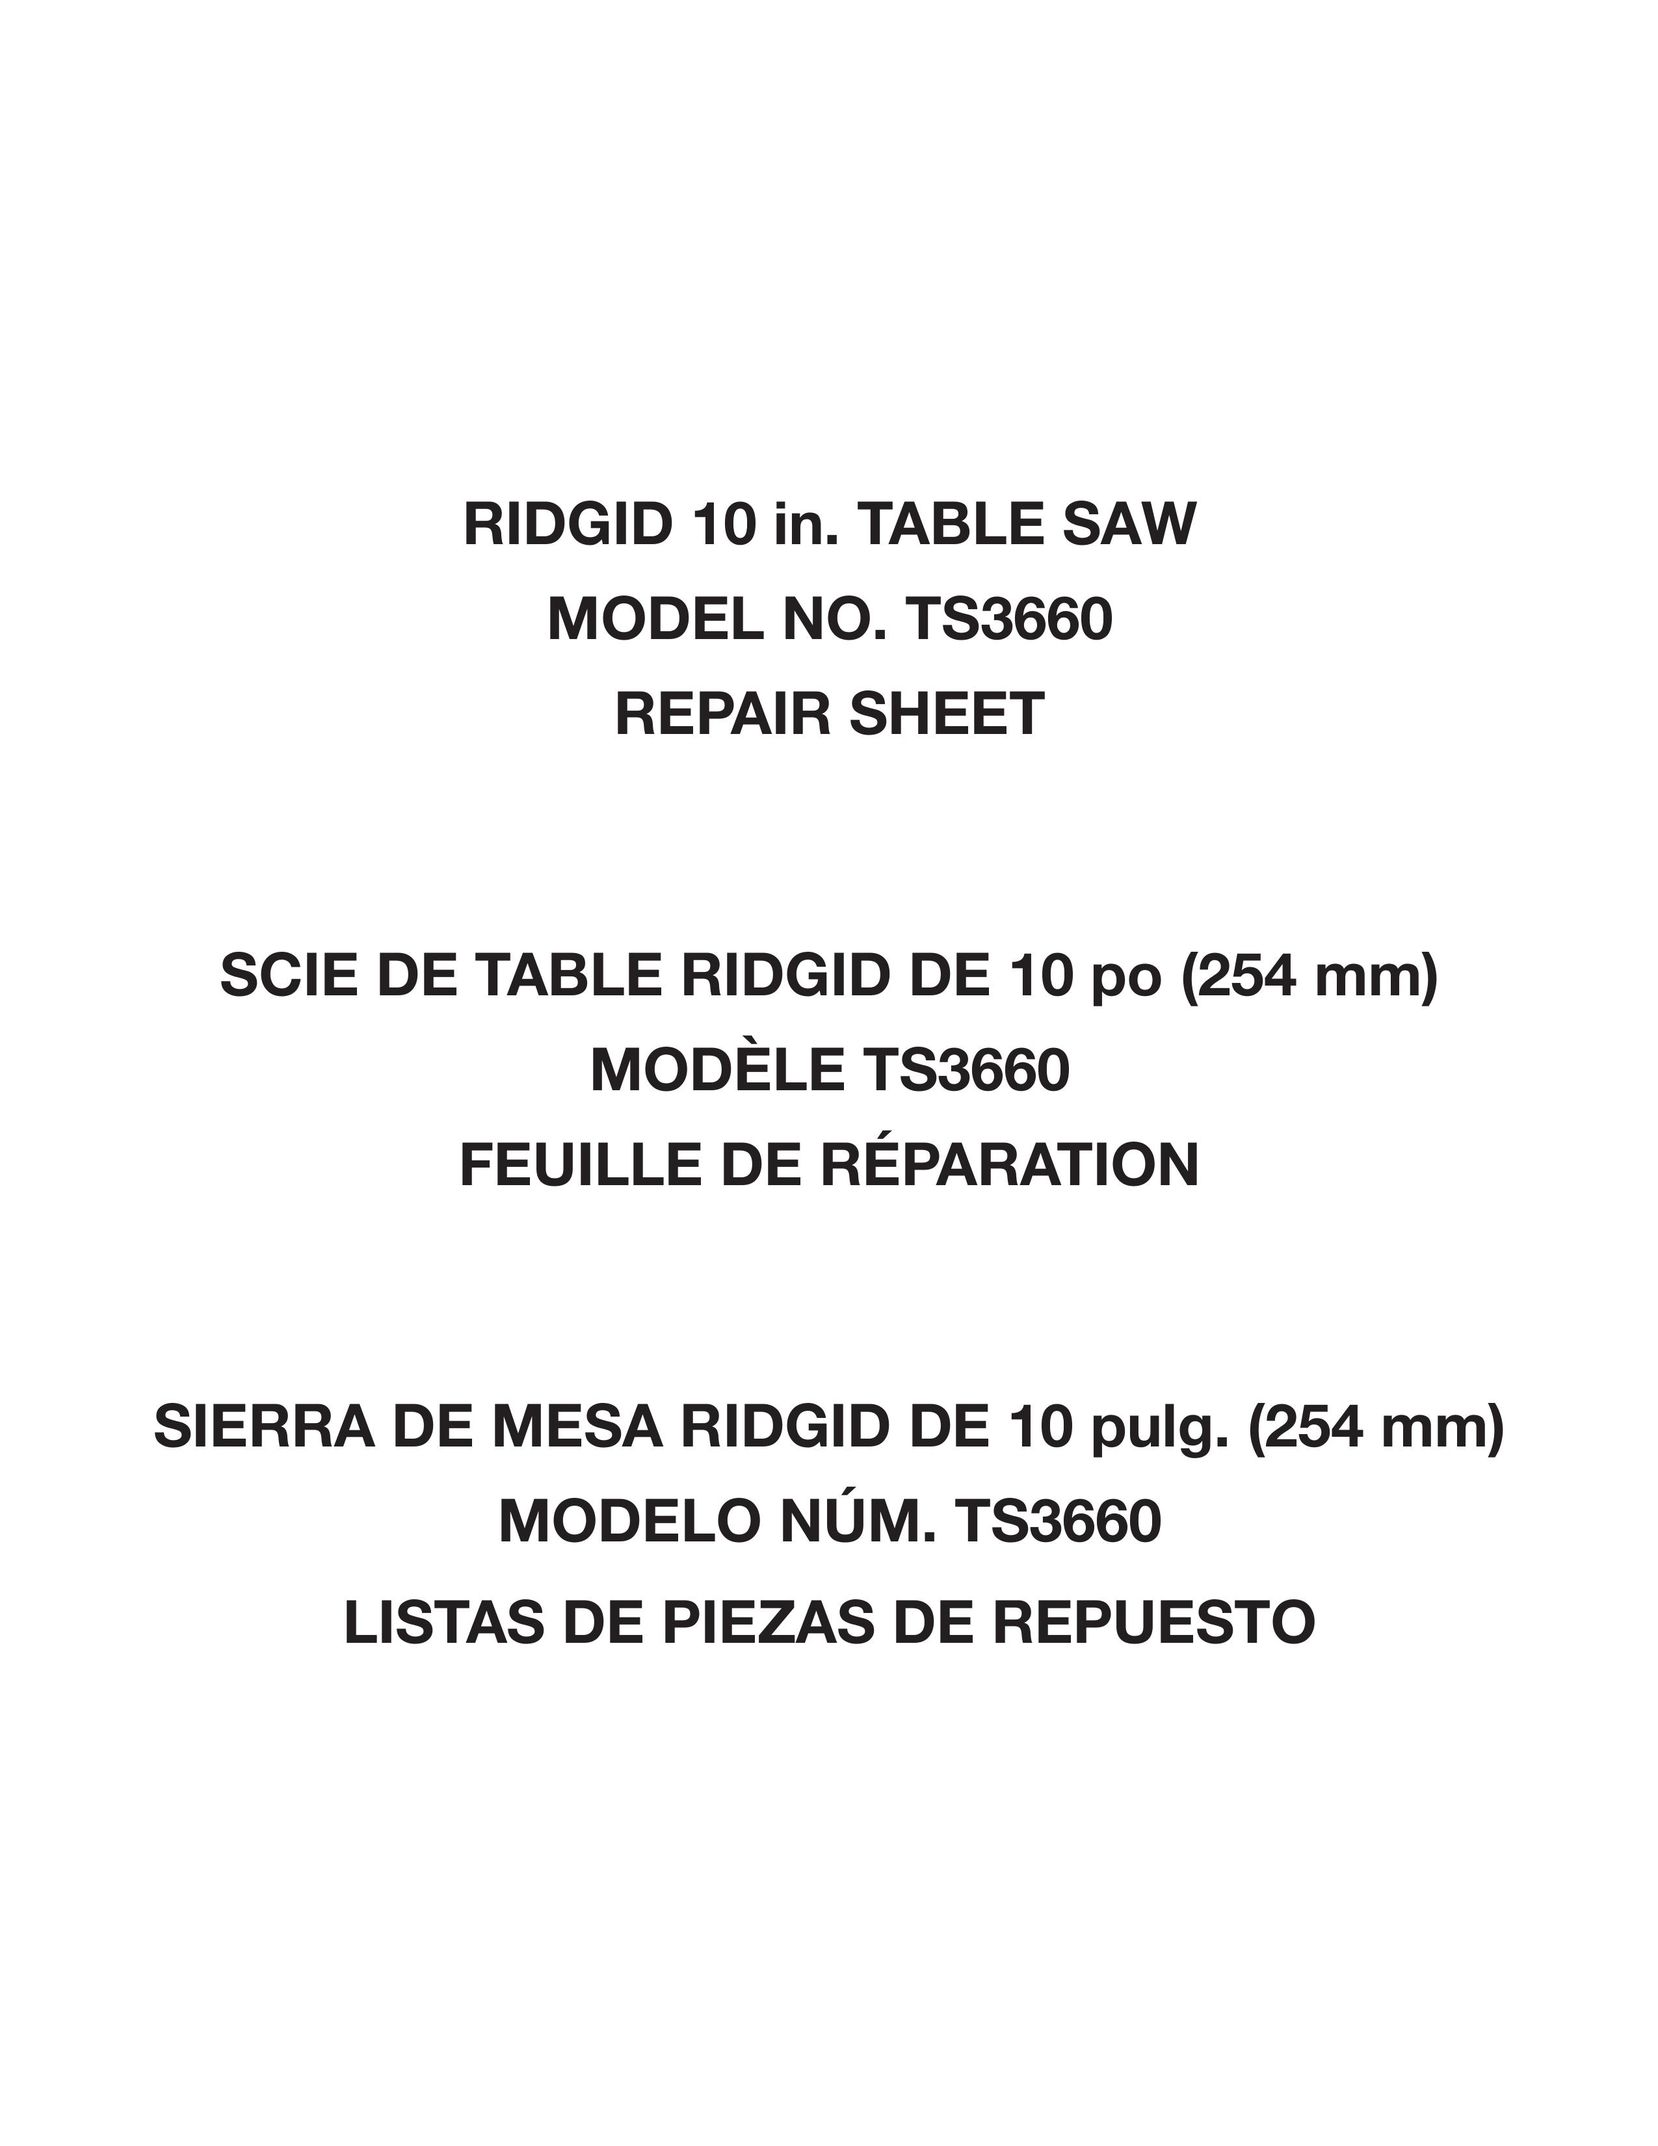 RIDGID TS3660 Saw User Manual